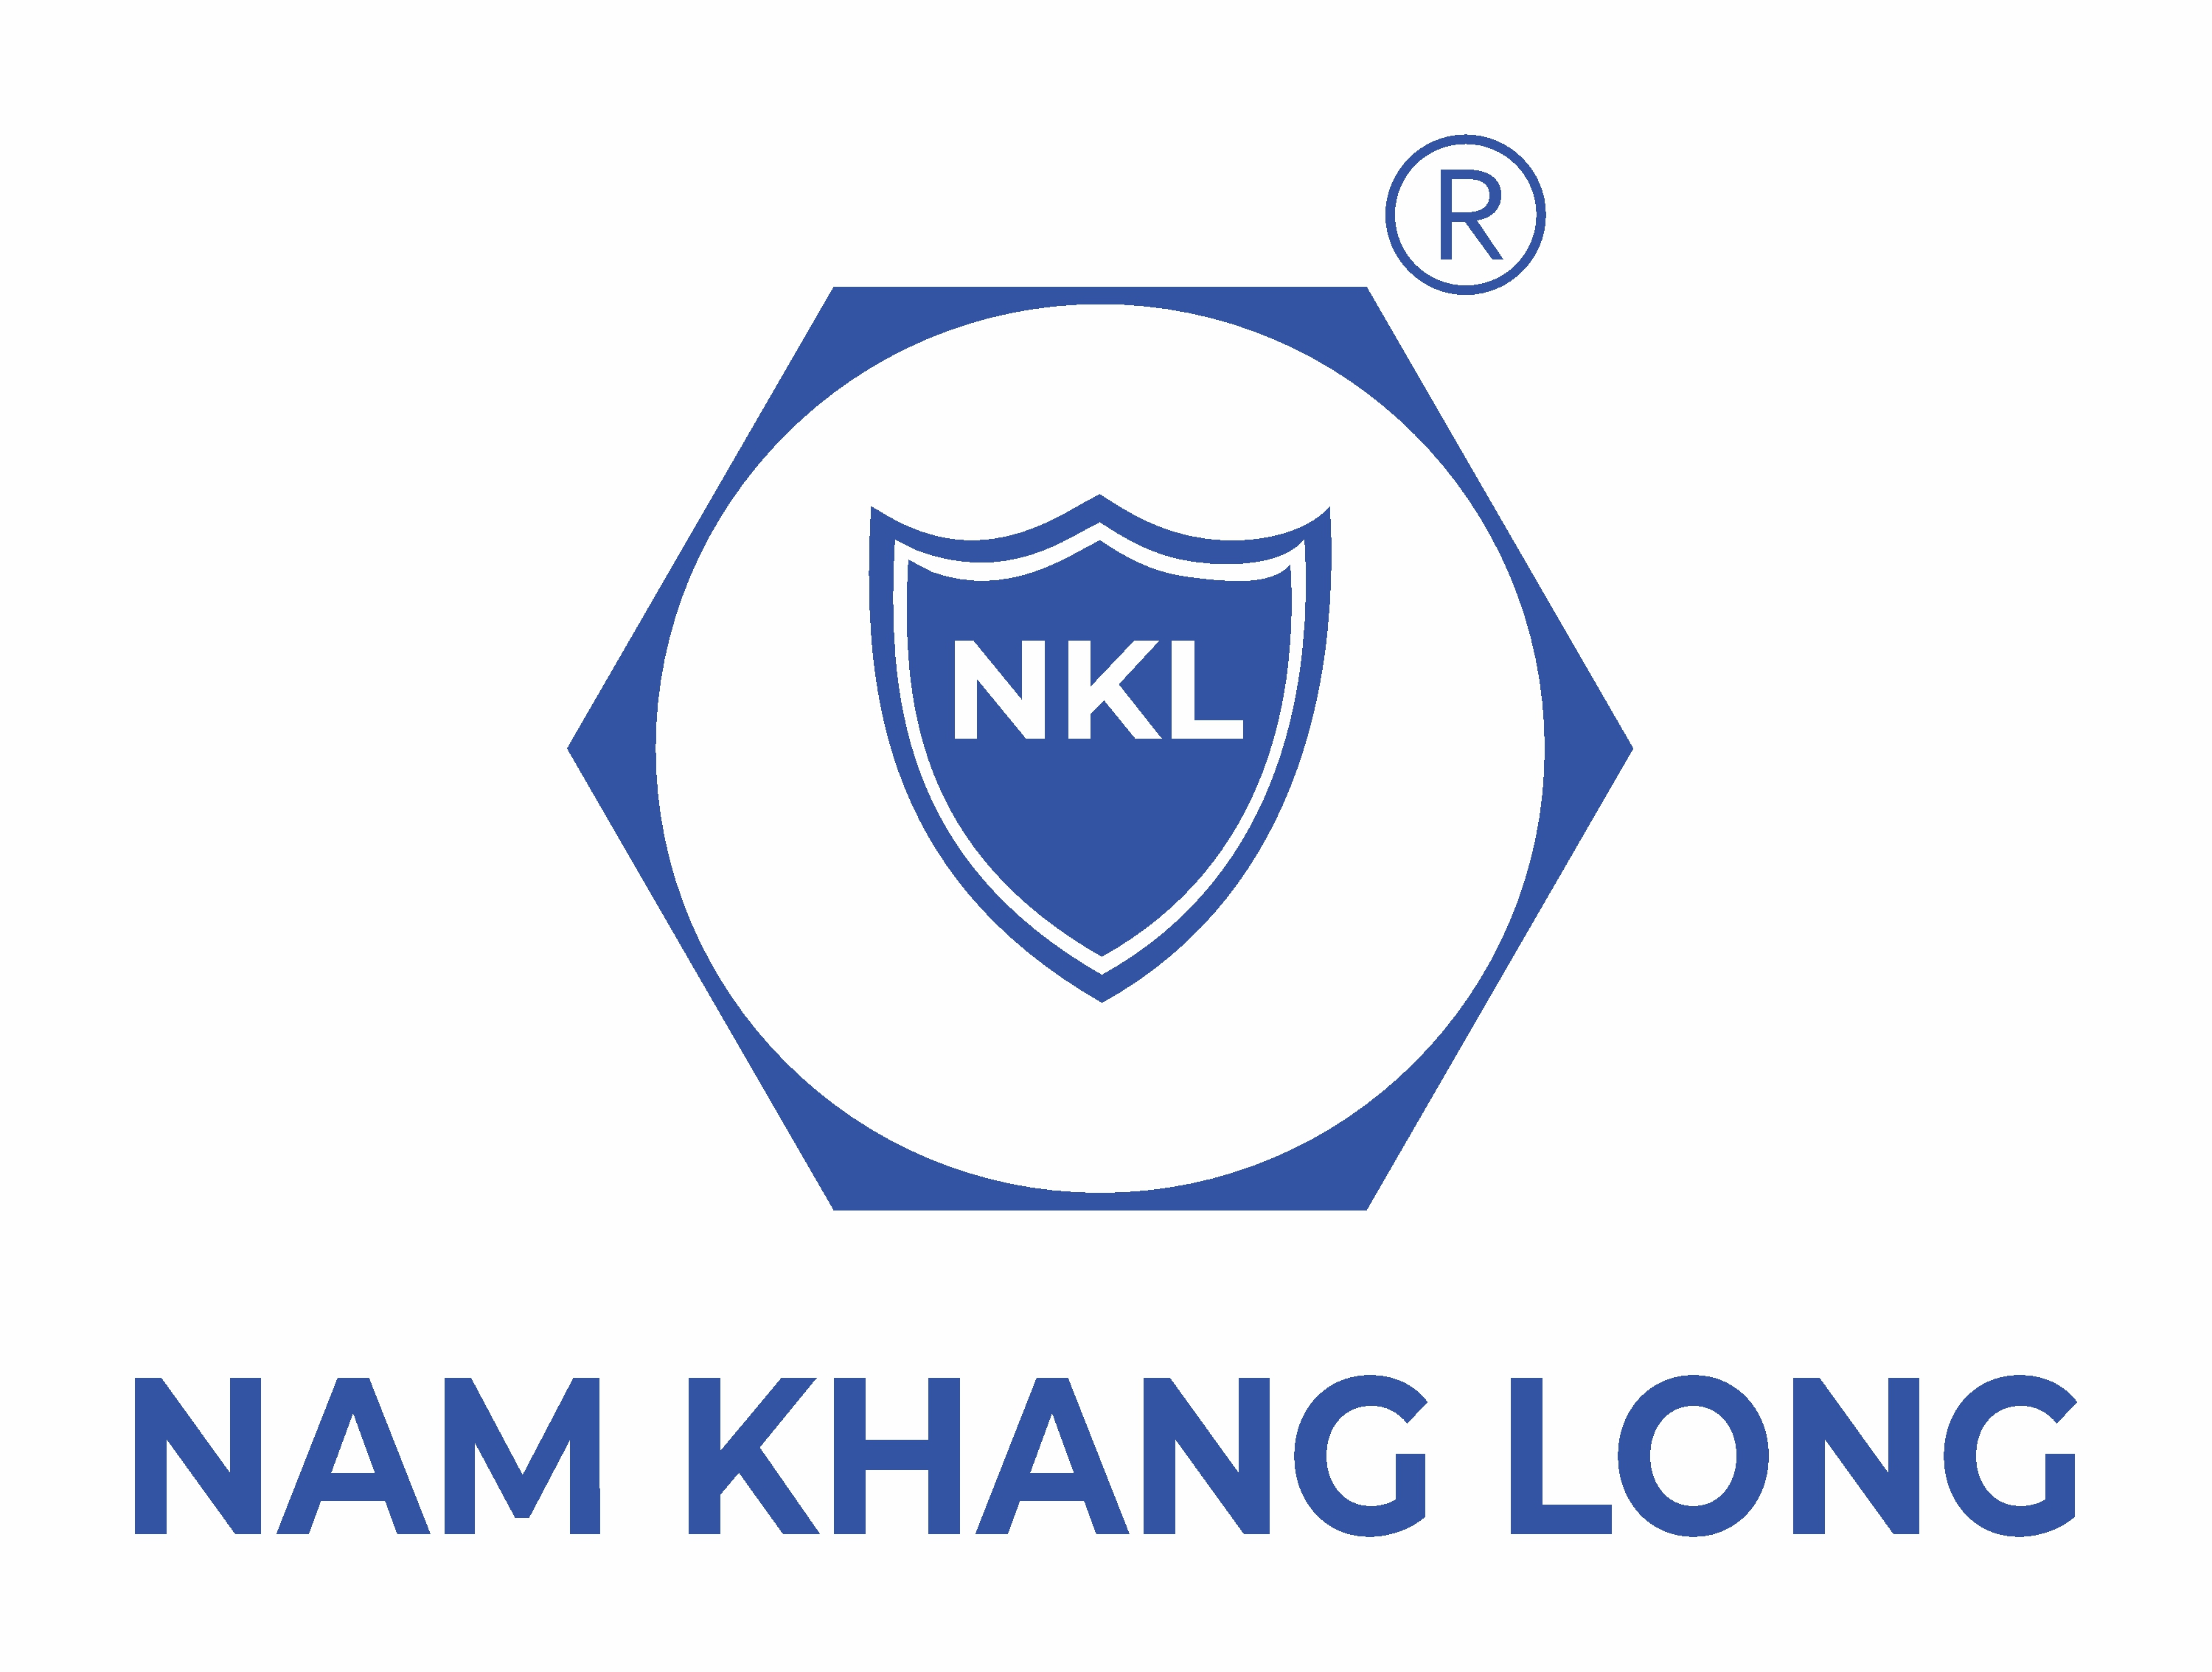 NAM KHANG LONG ONLINE